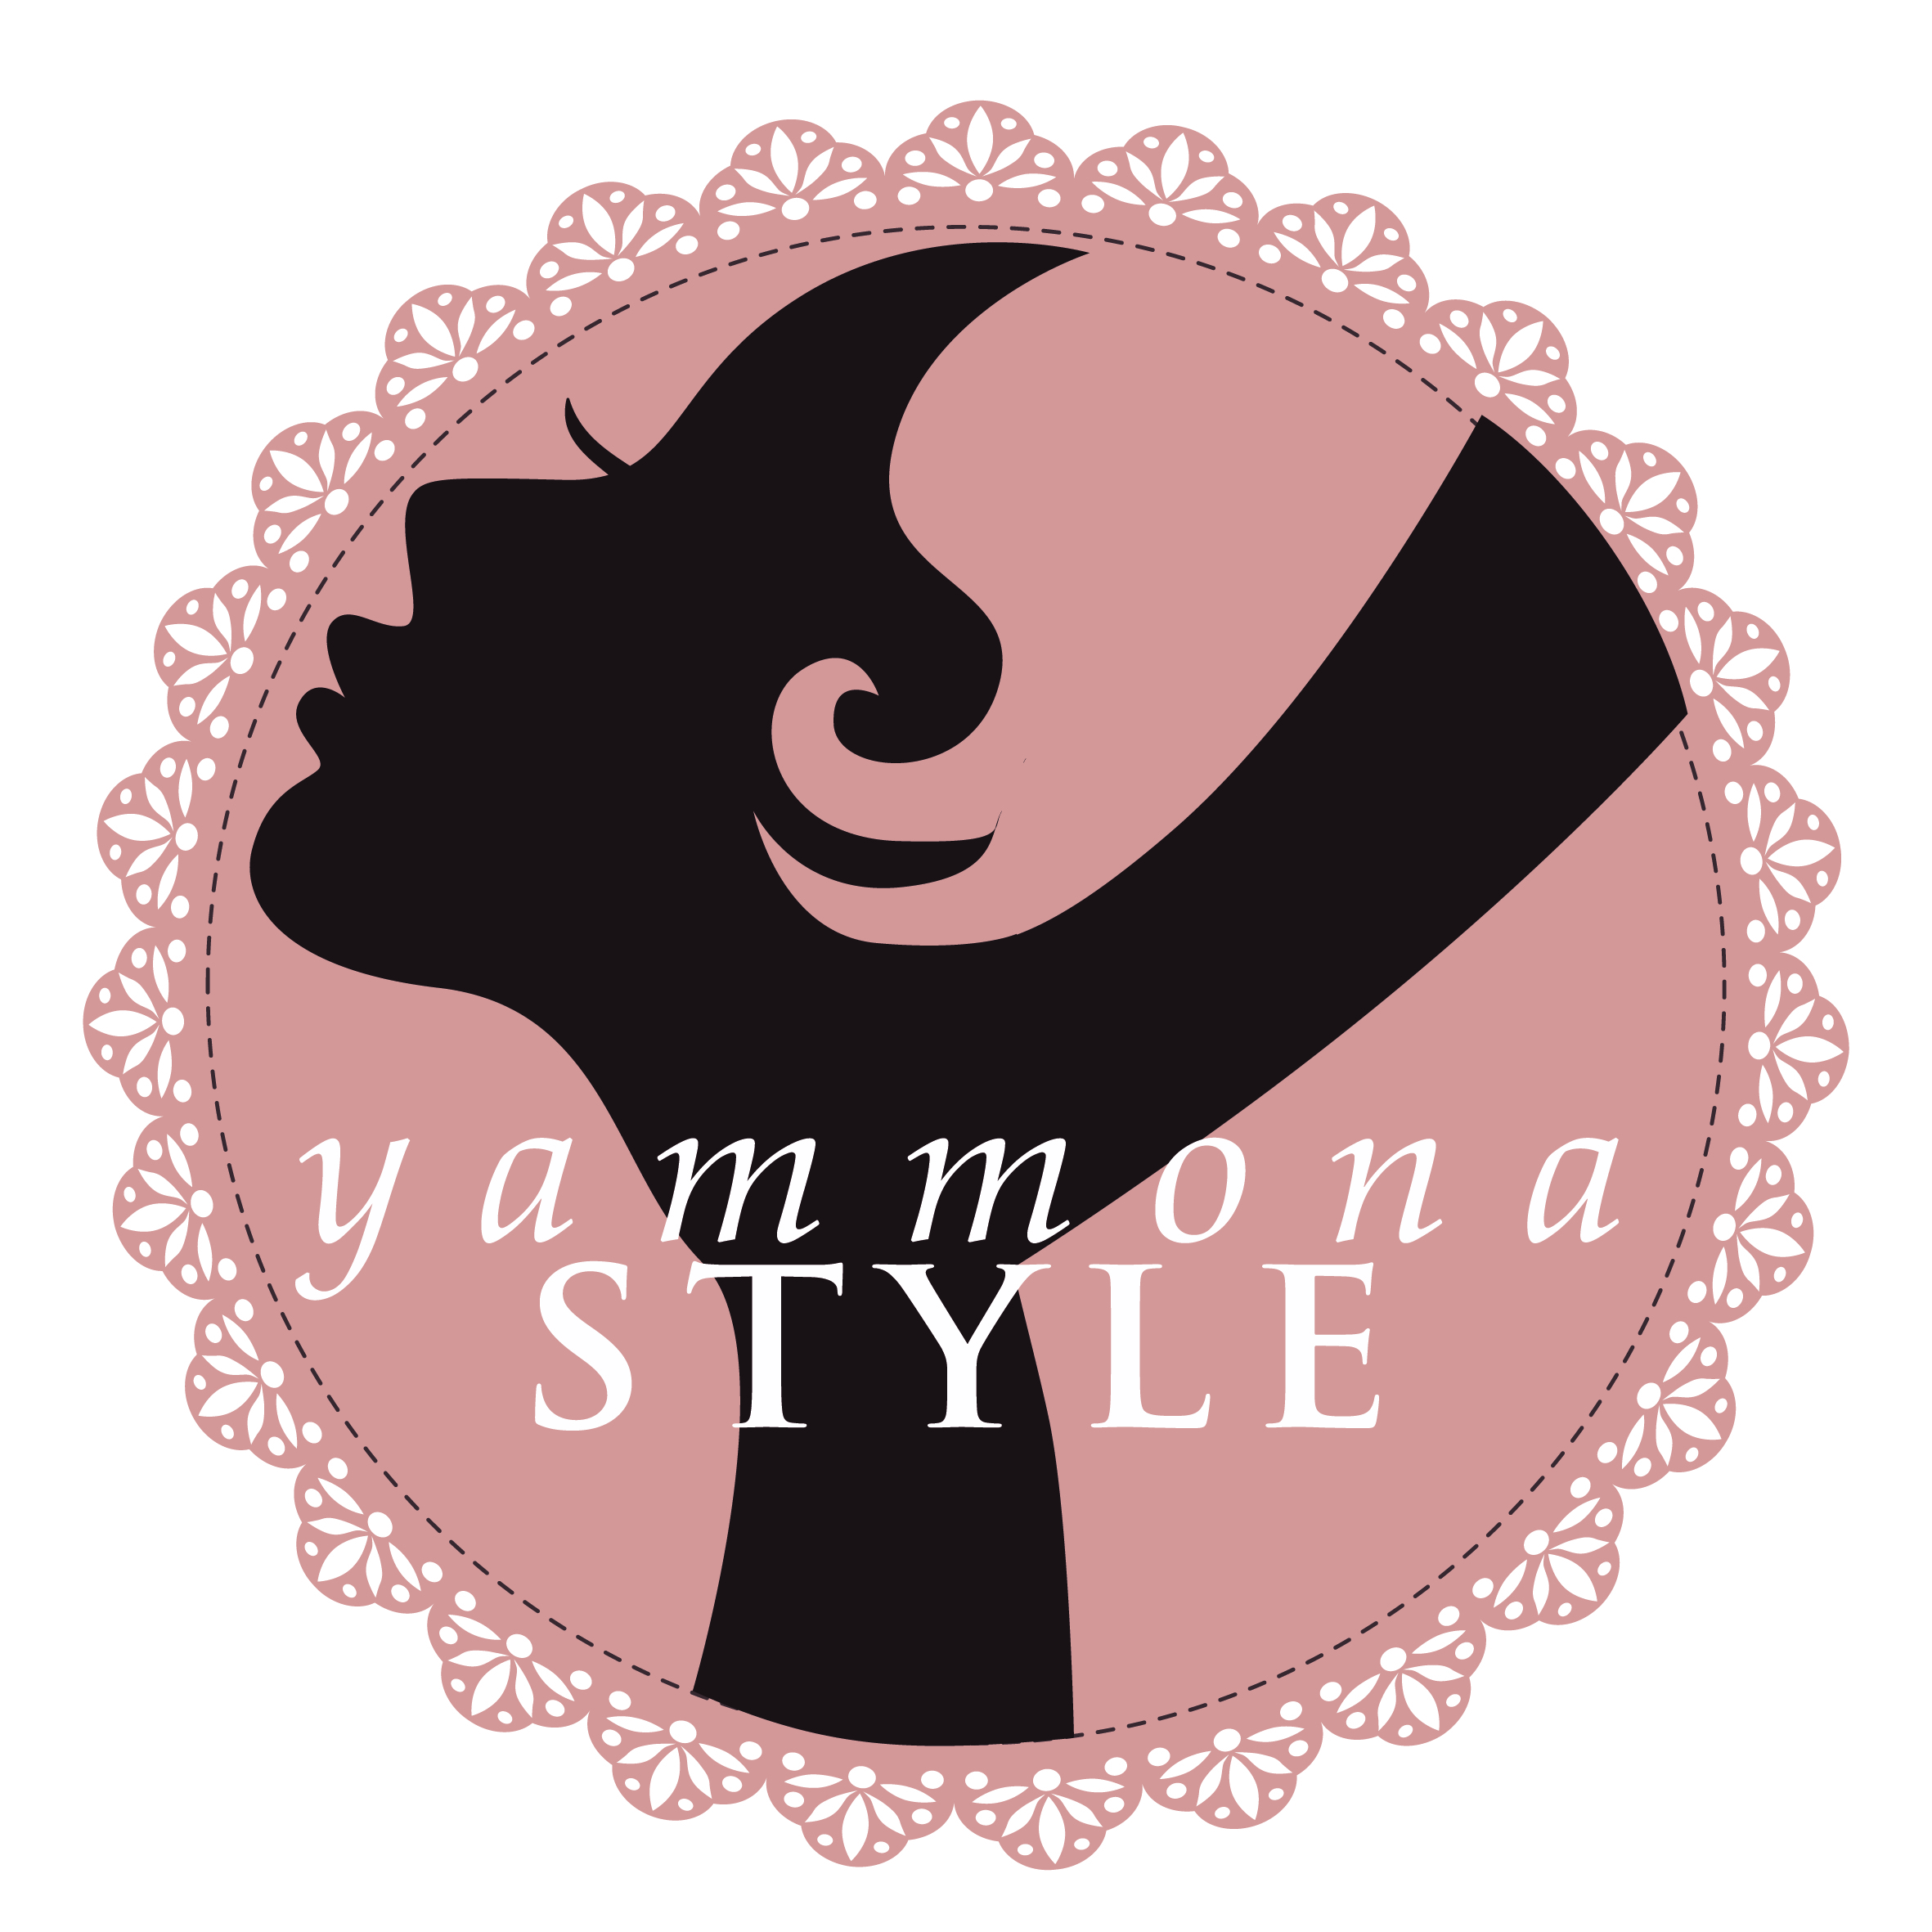 Yammona Blog